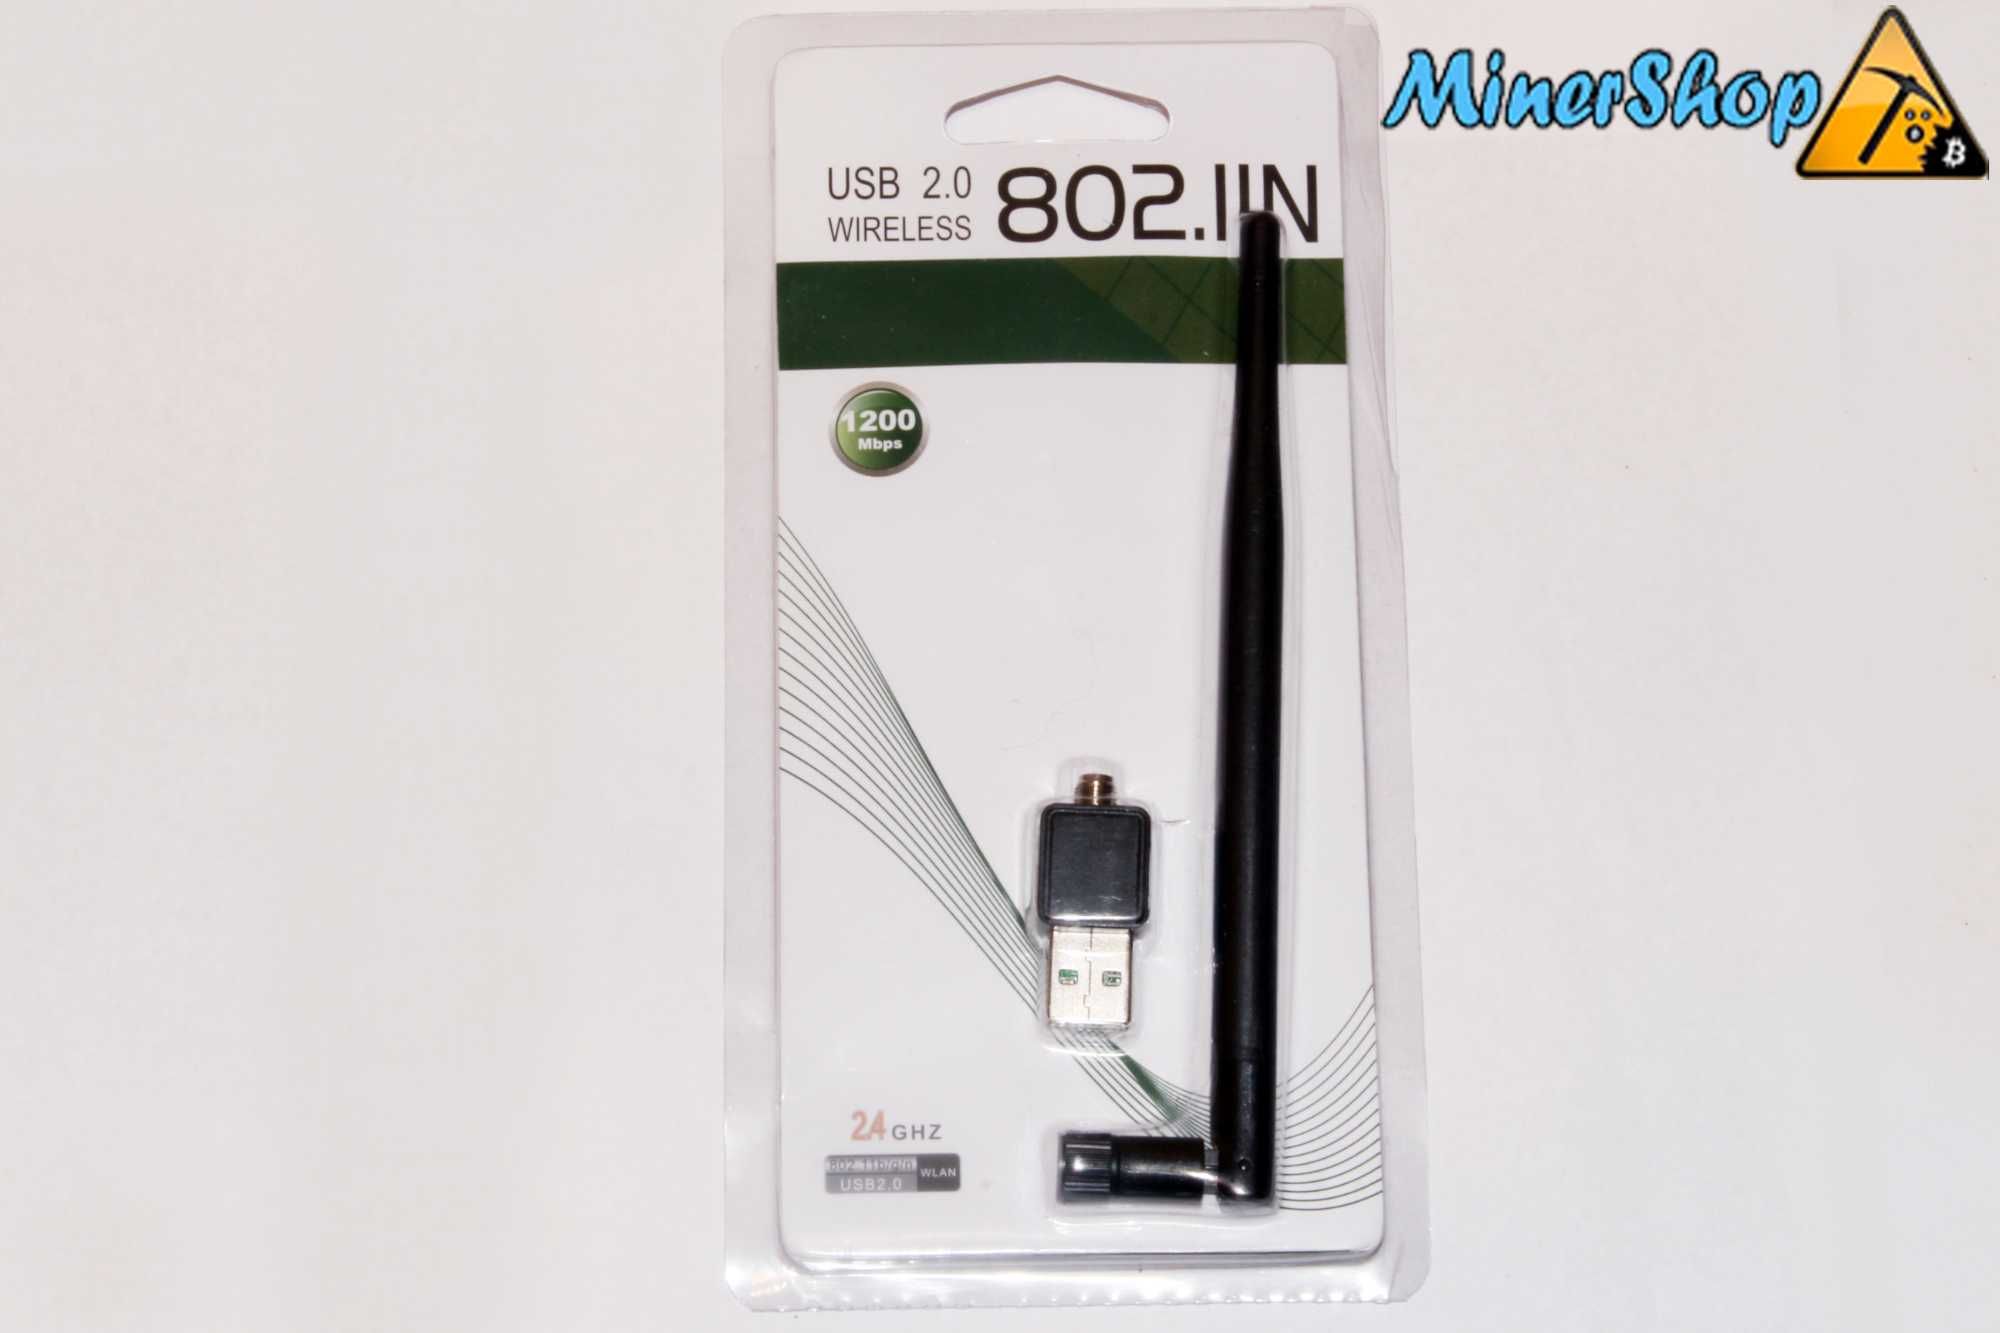 USB WiFi адаптер 5db 150Mbps 802.11n интернет сетевая карта